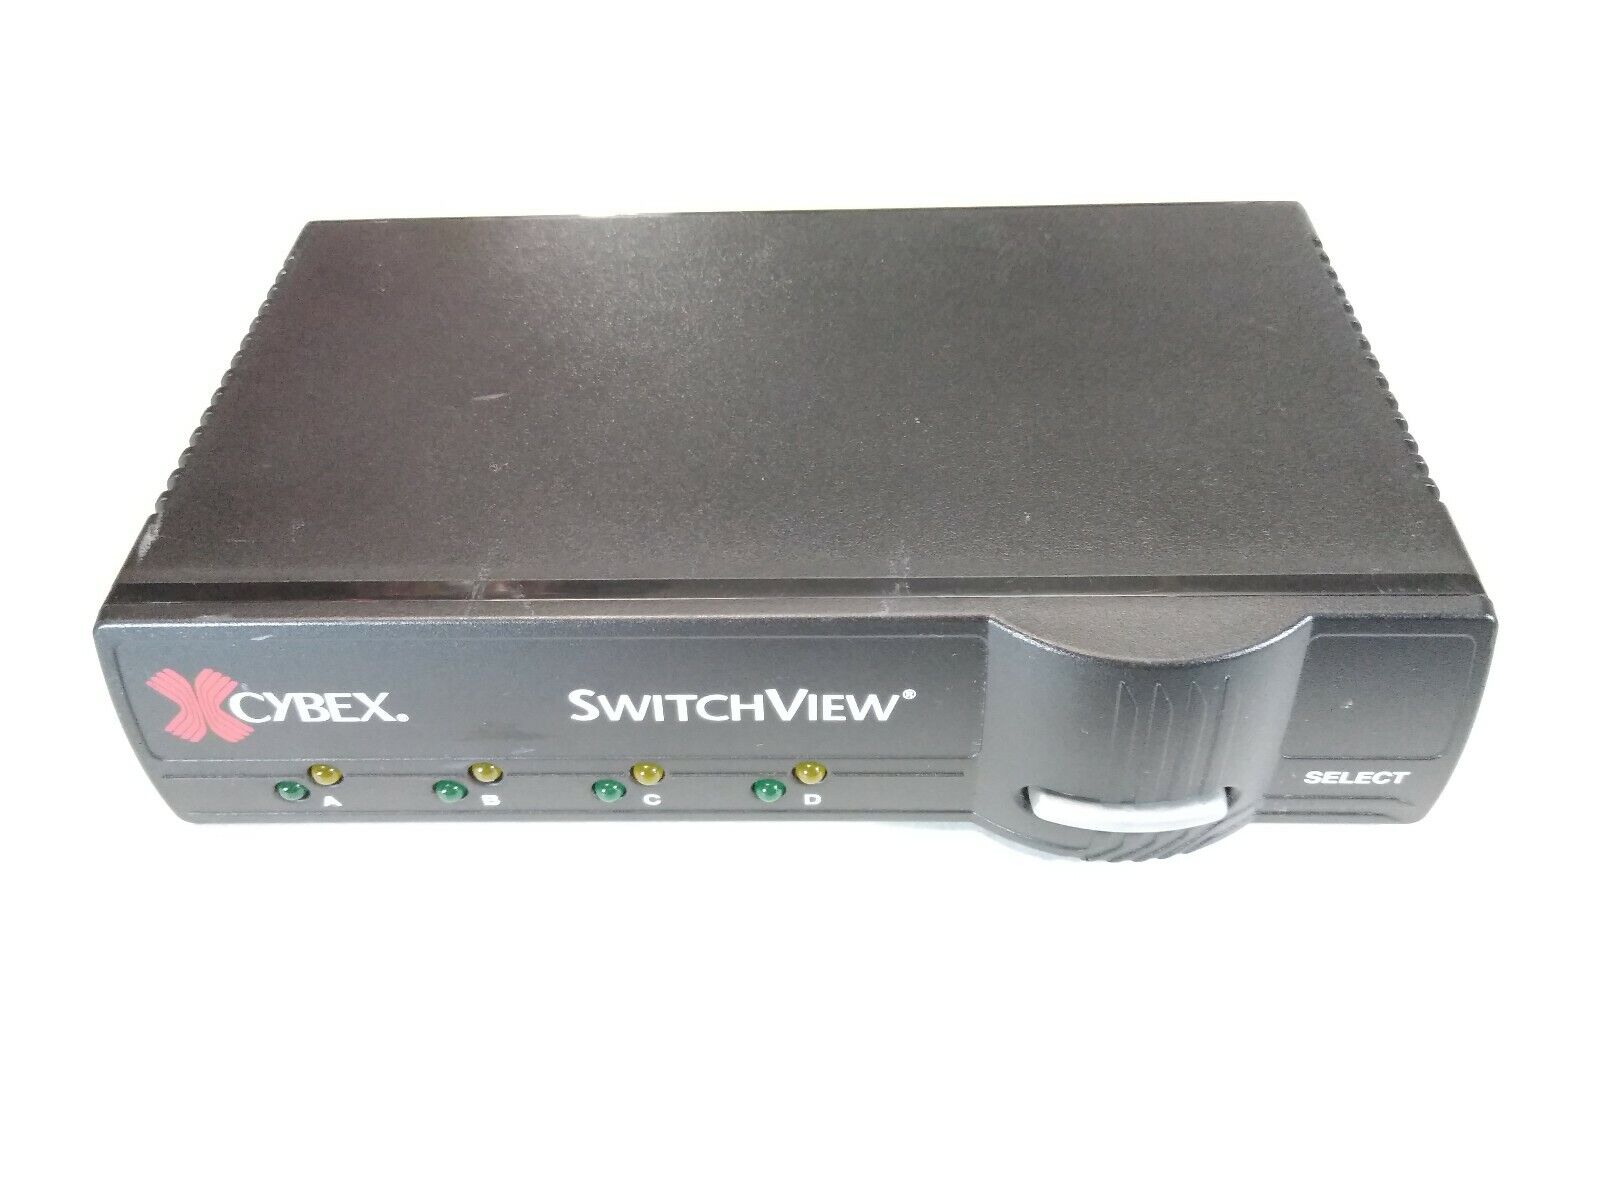 Cybex SwitchView 4-Port 520-195-003. NO CORDS